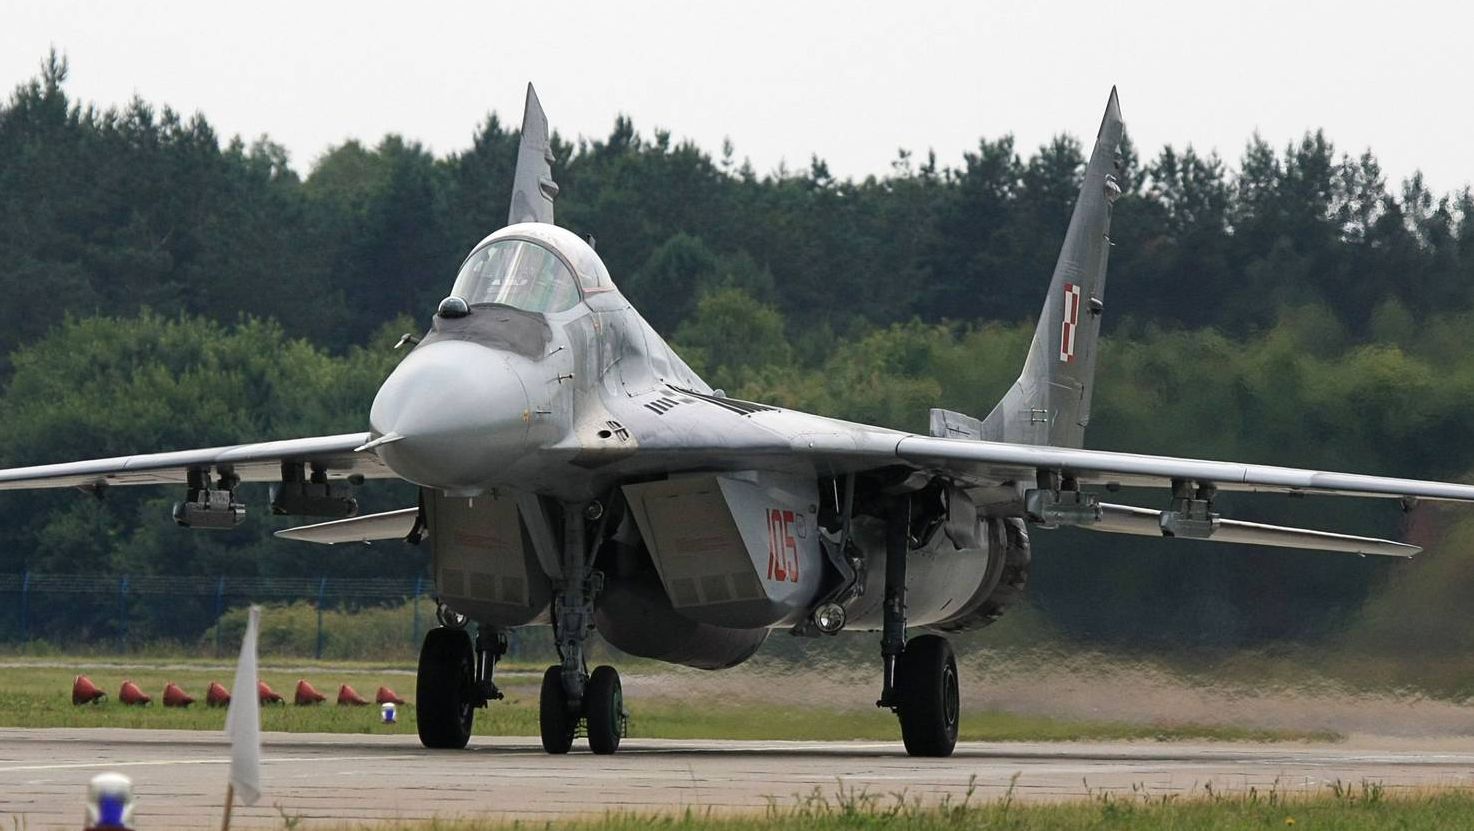 MiG-29 russisch Микоян-Гуревич МиГ-29, NATO-Codename Fulcrum